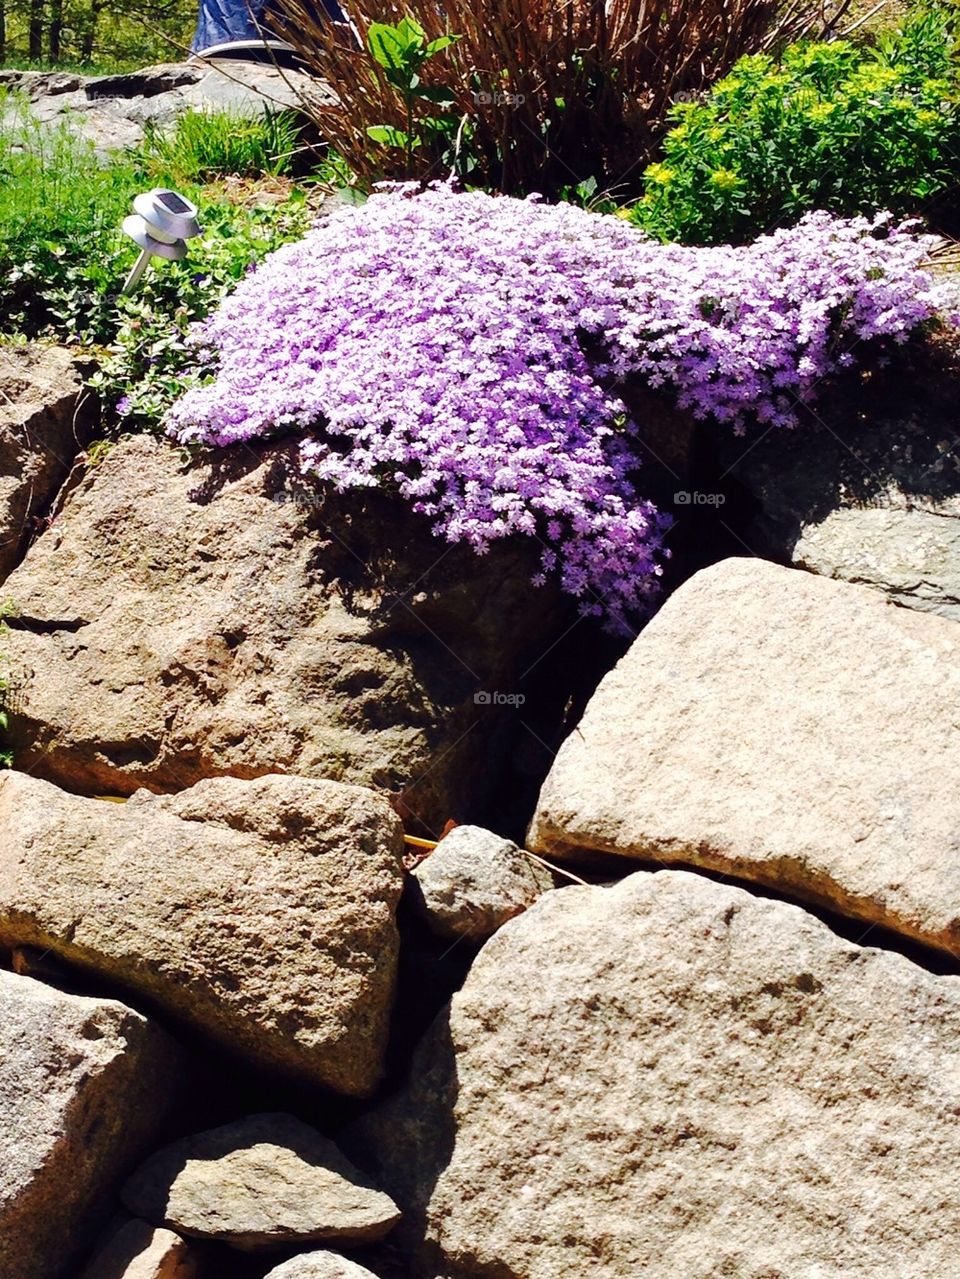 Rock garden with blooming flowers